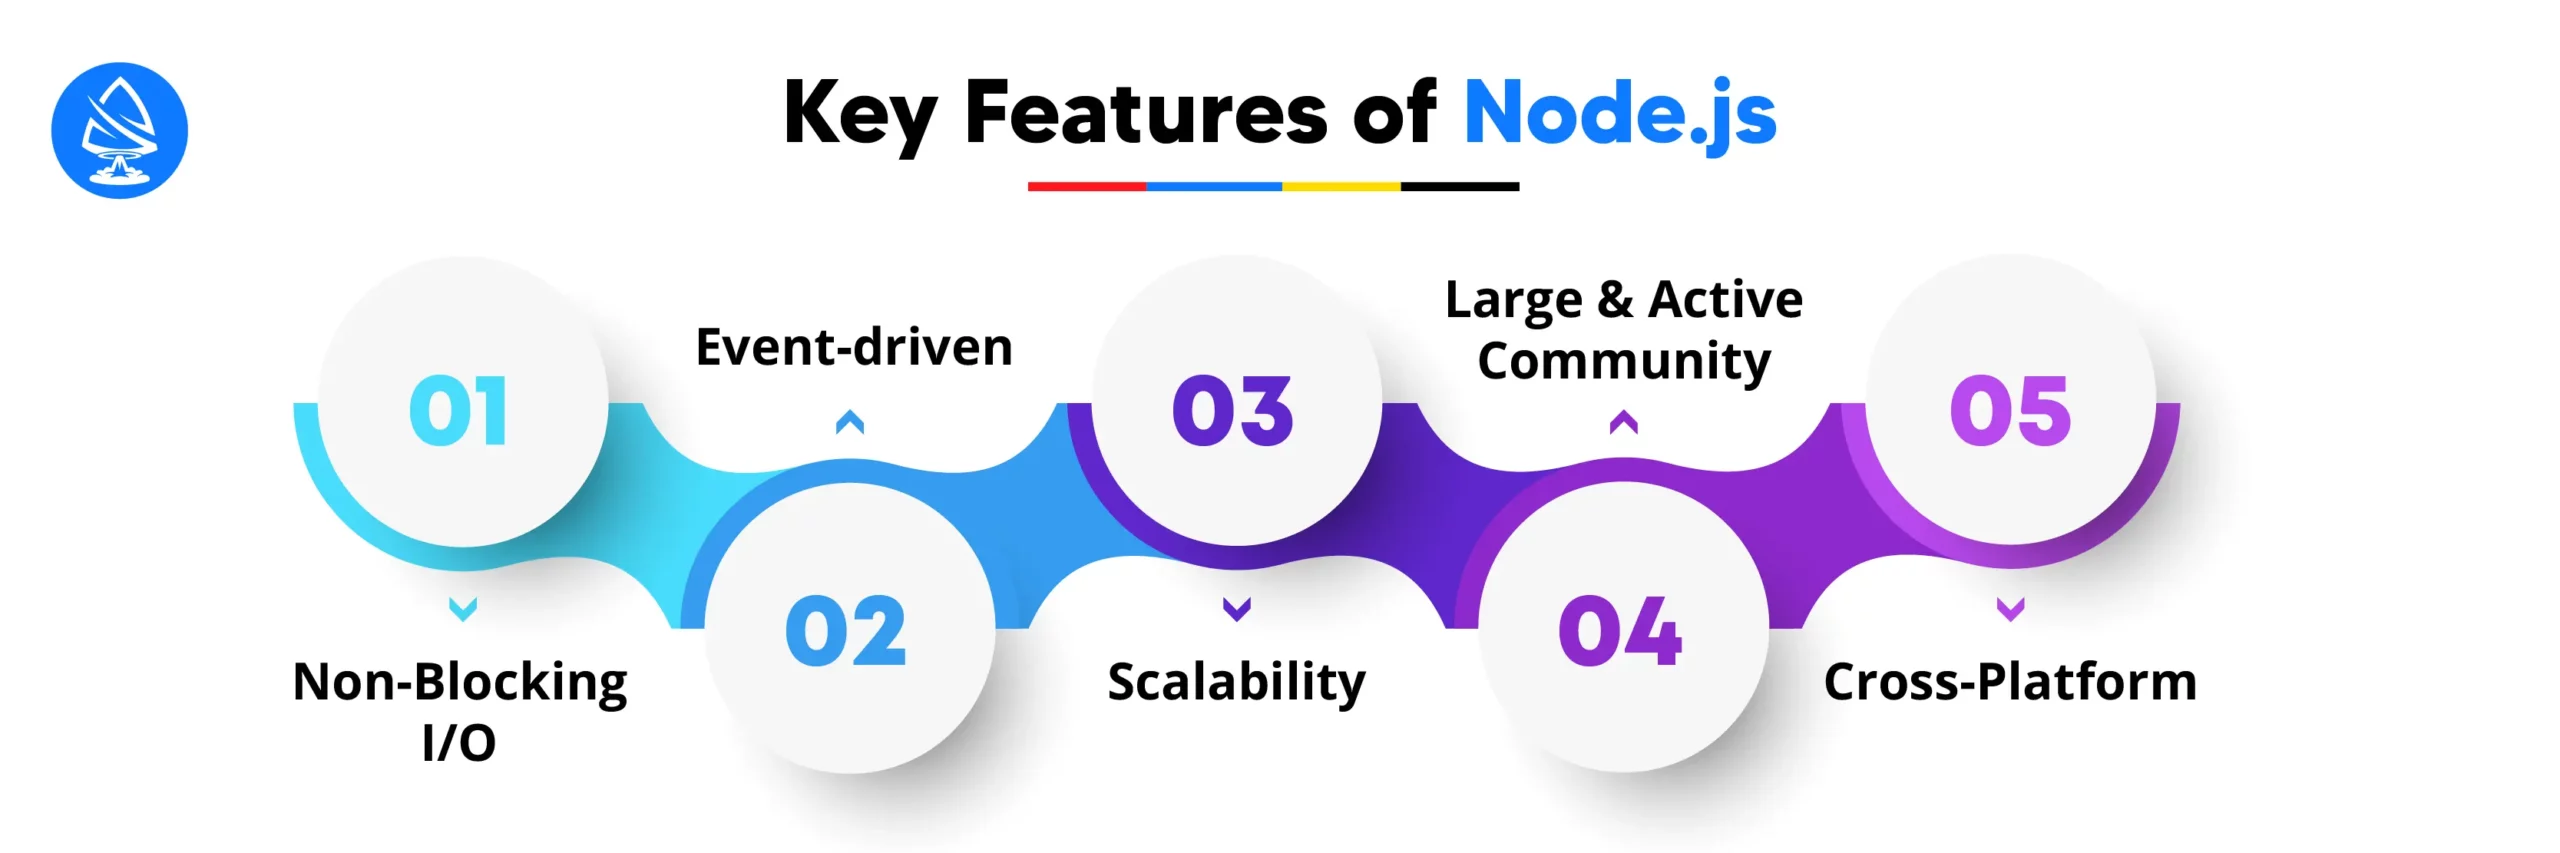 Key Features of Node.js